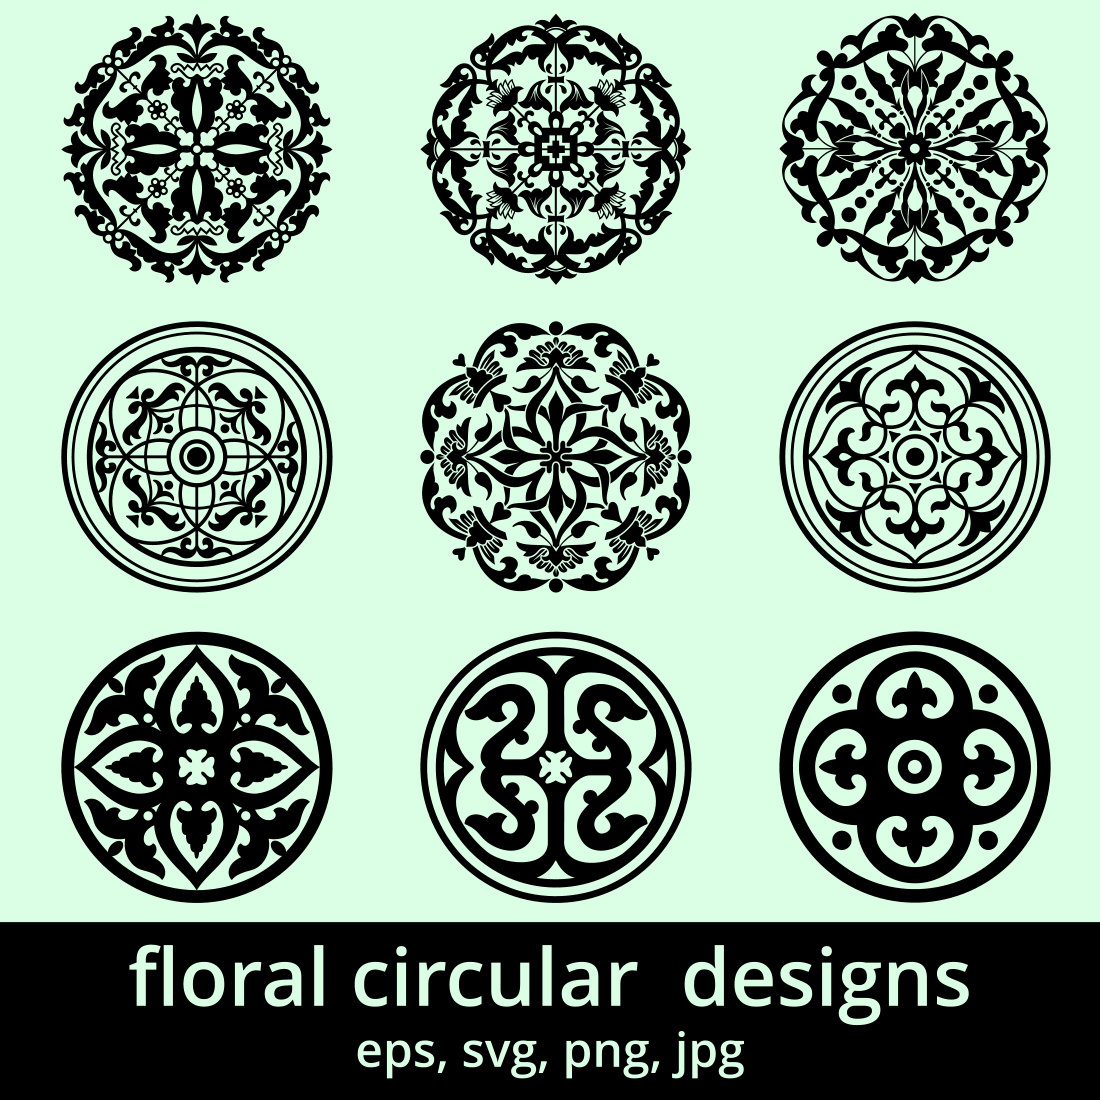 Circular Floral Designs cover image.